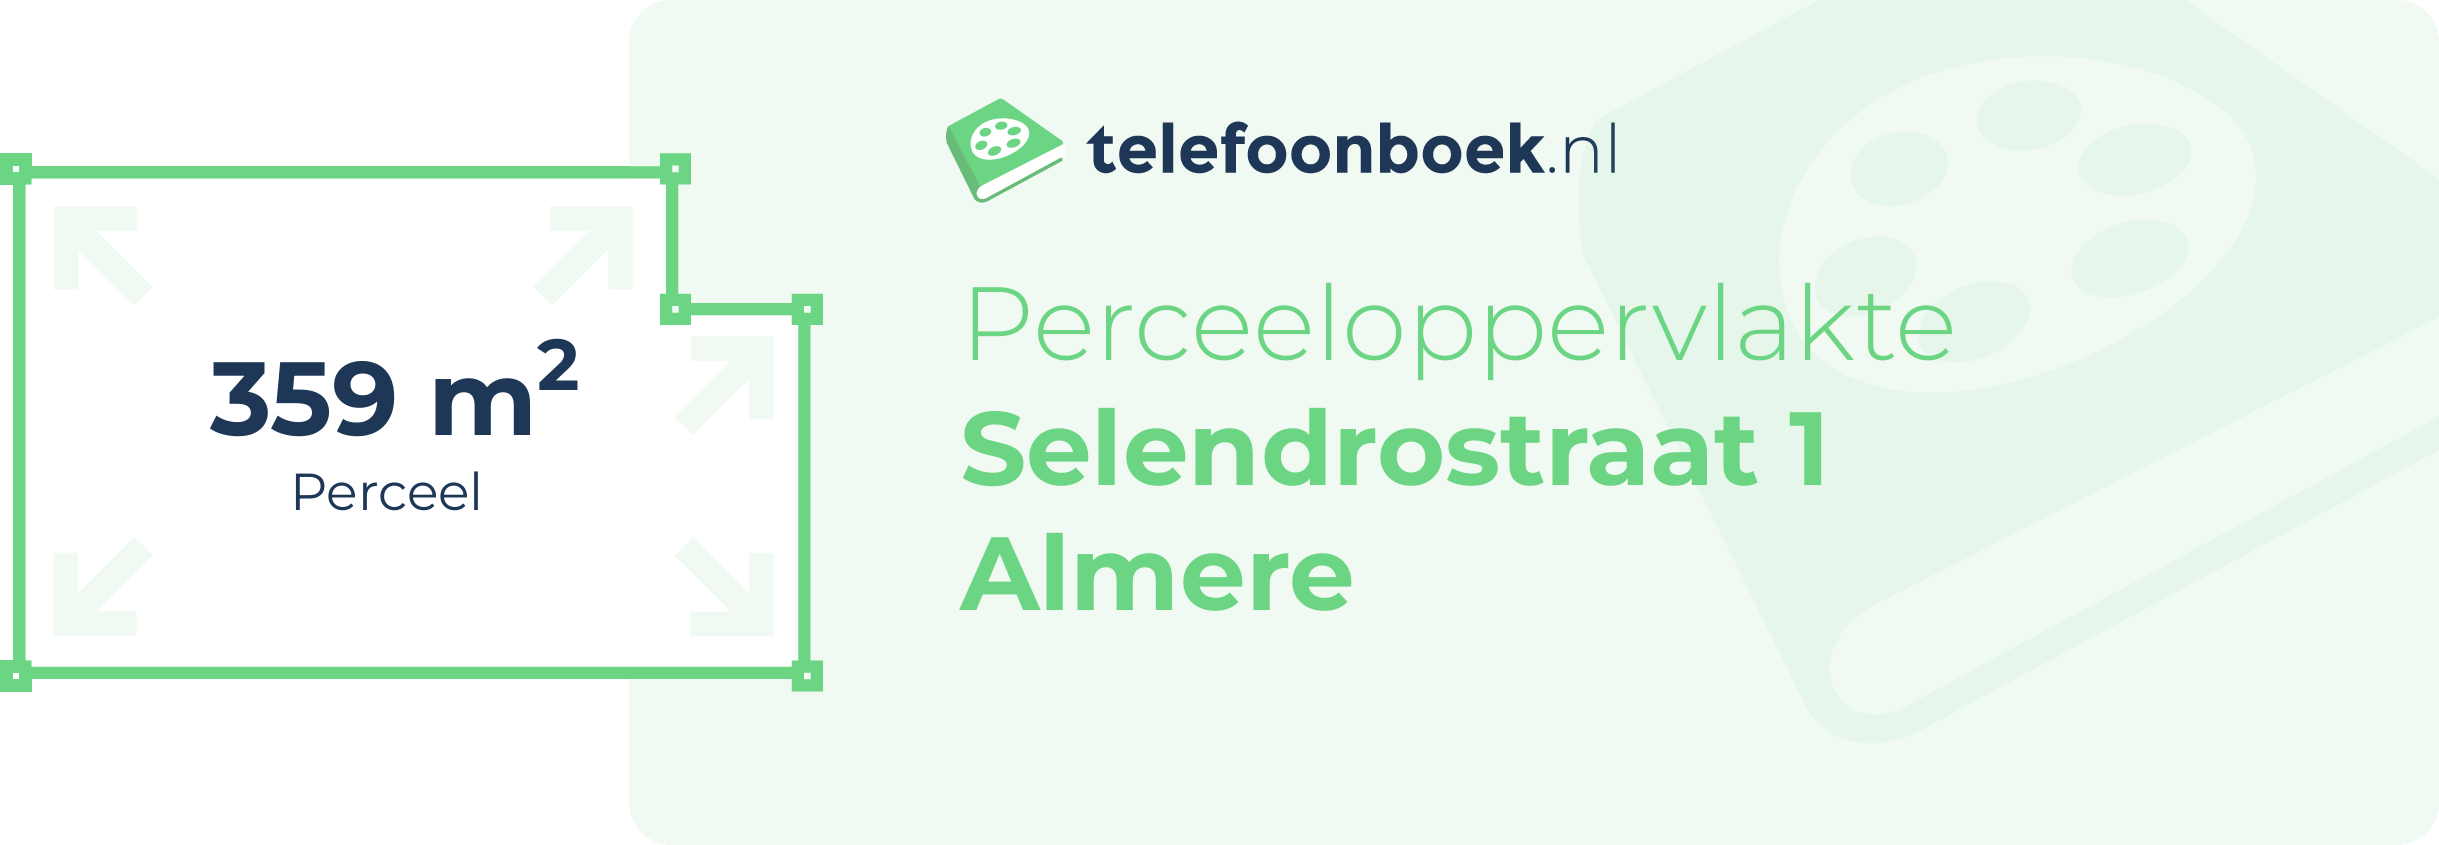 Perceeloppervlakte Selendrostraat 1 Almere